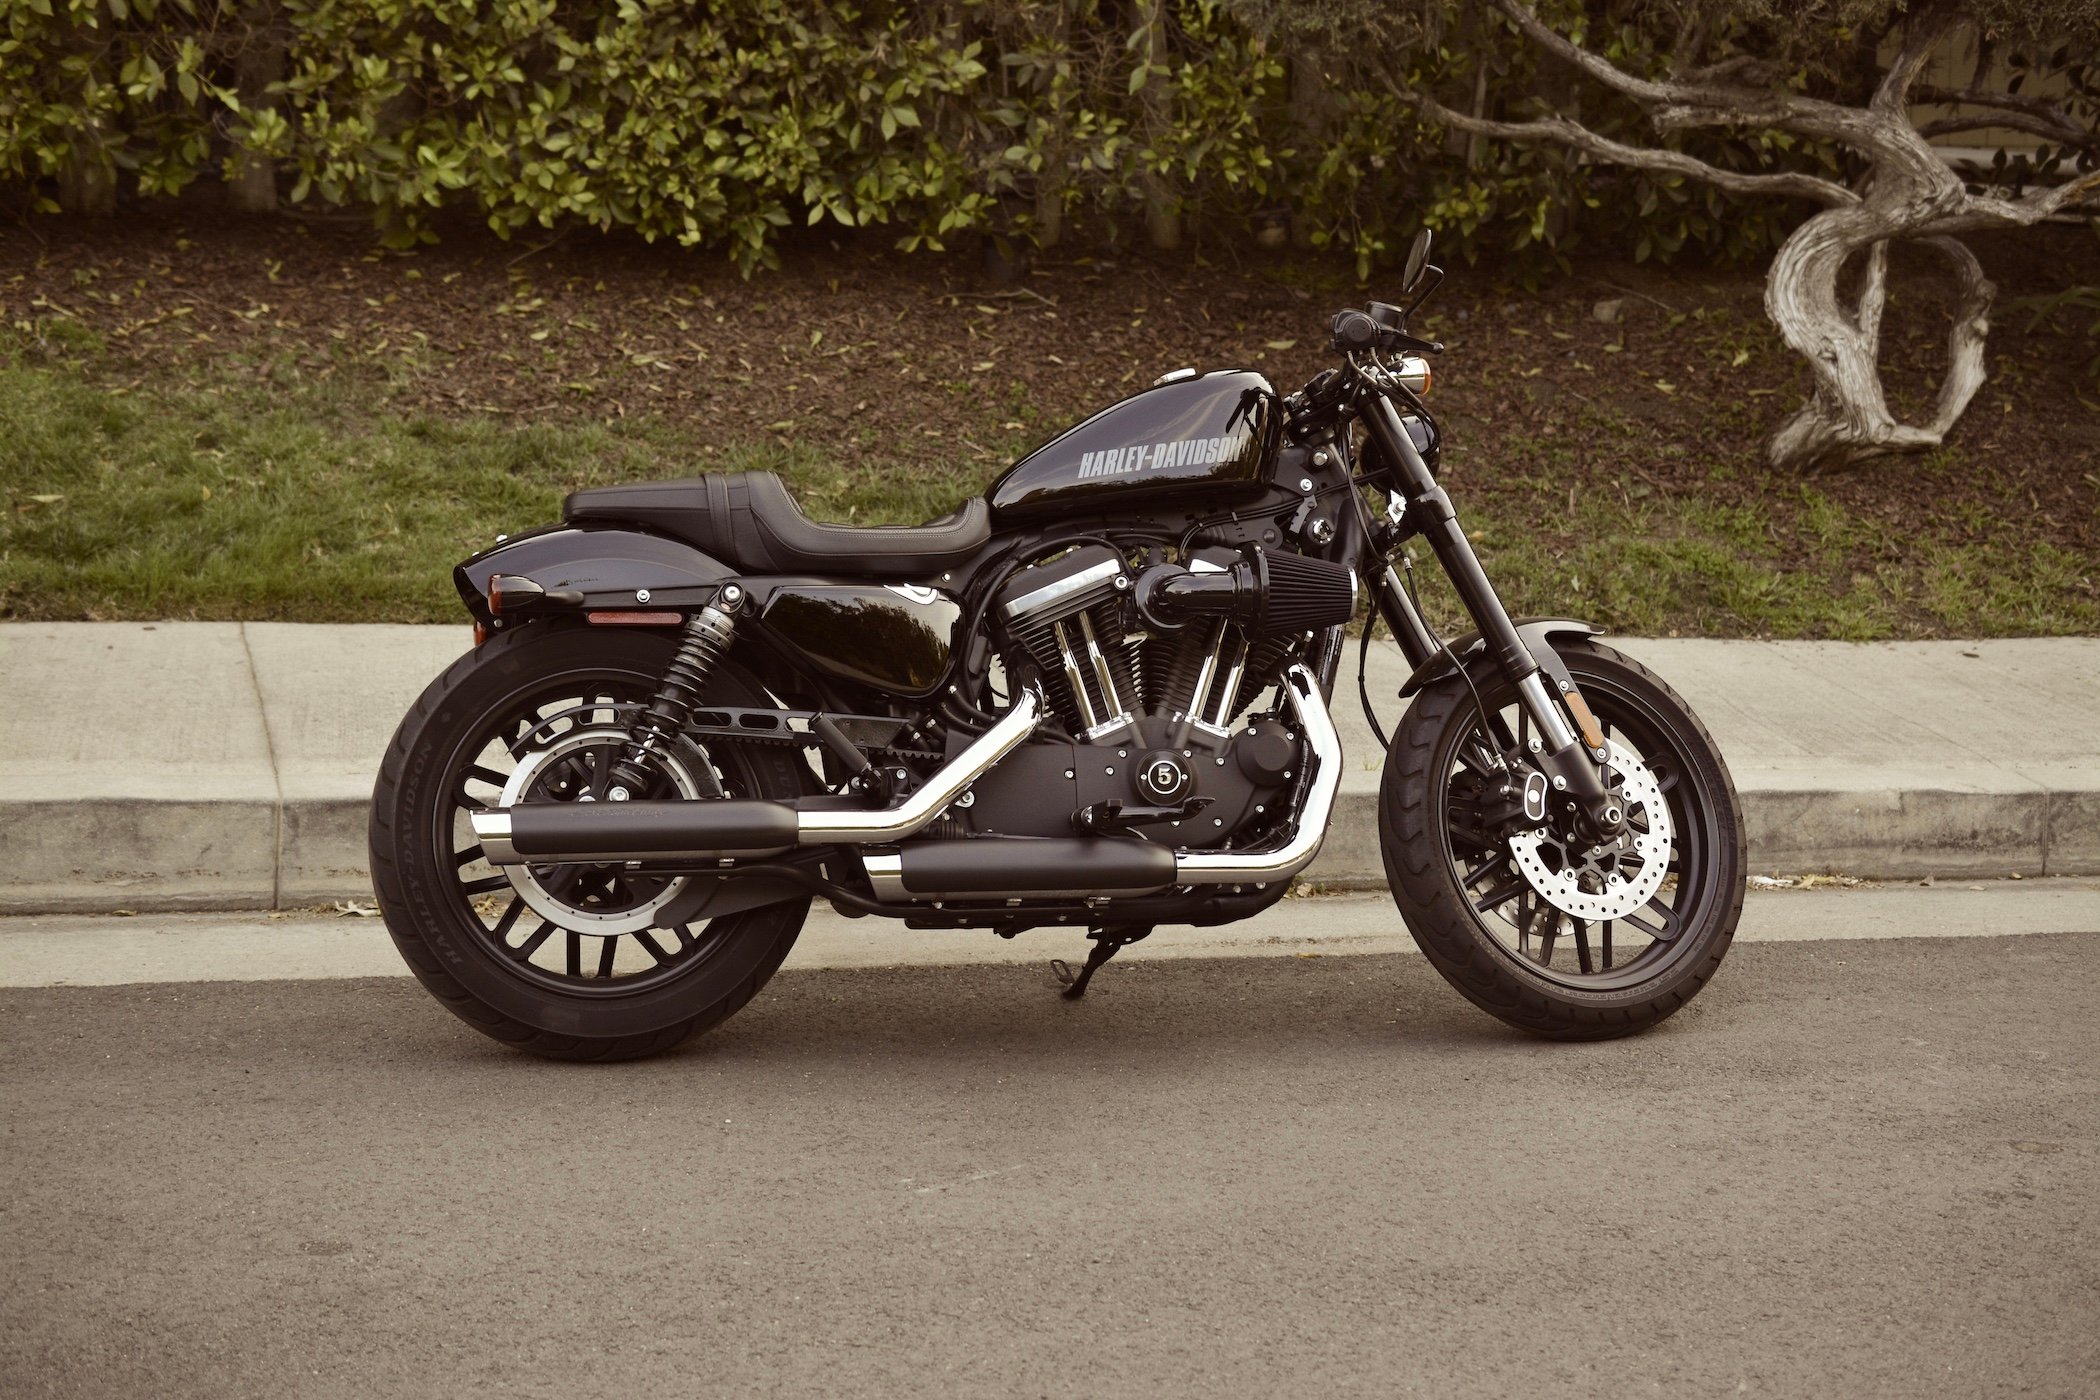 File:Harley-davidson-sportster-iron-883.jpg - Wikimedia Commons